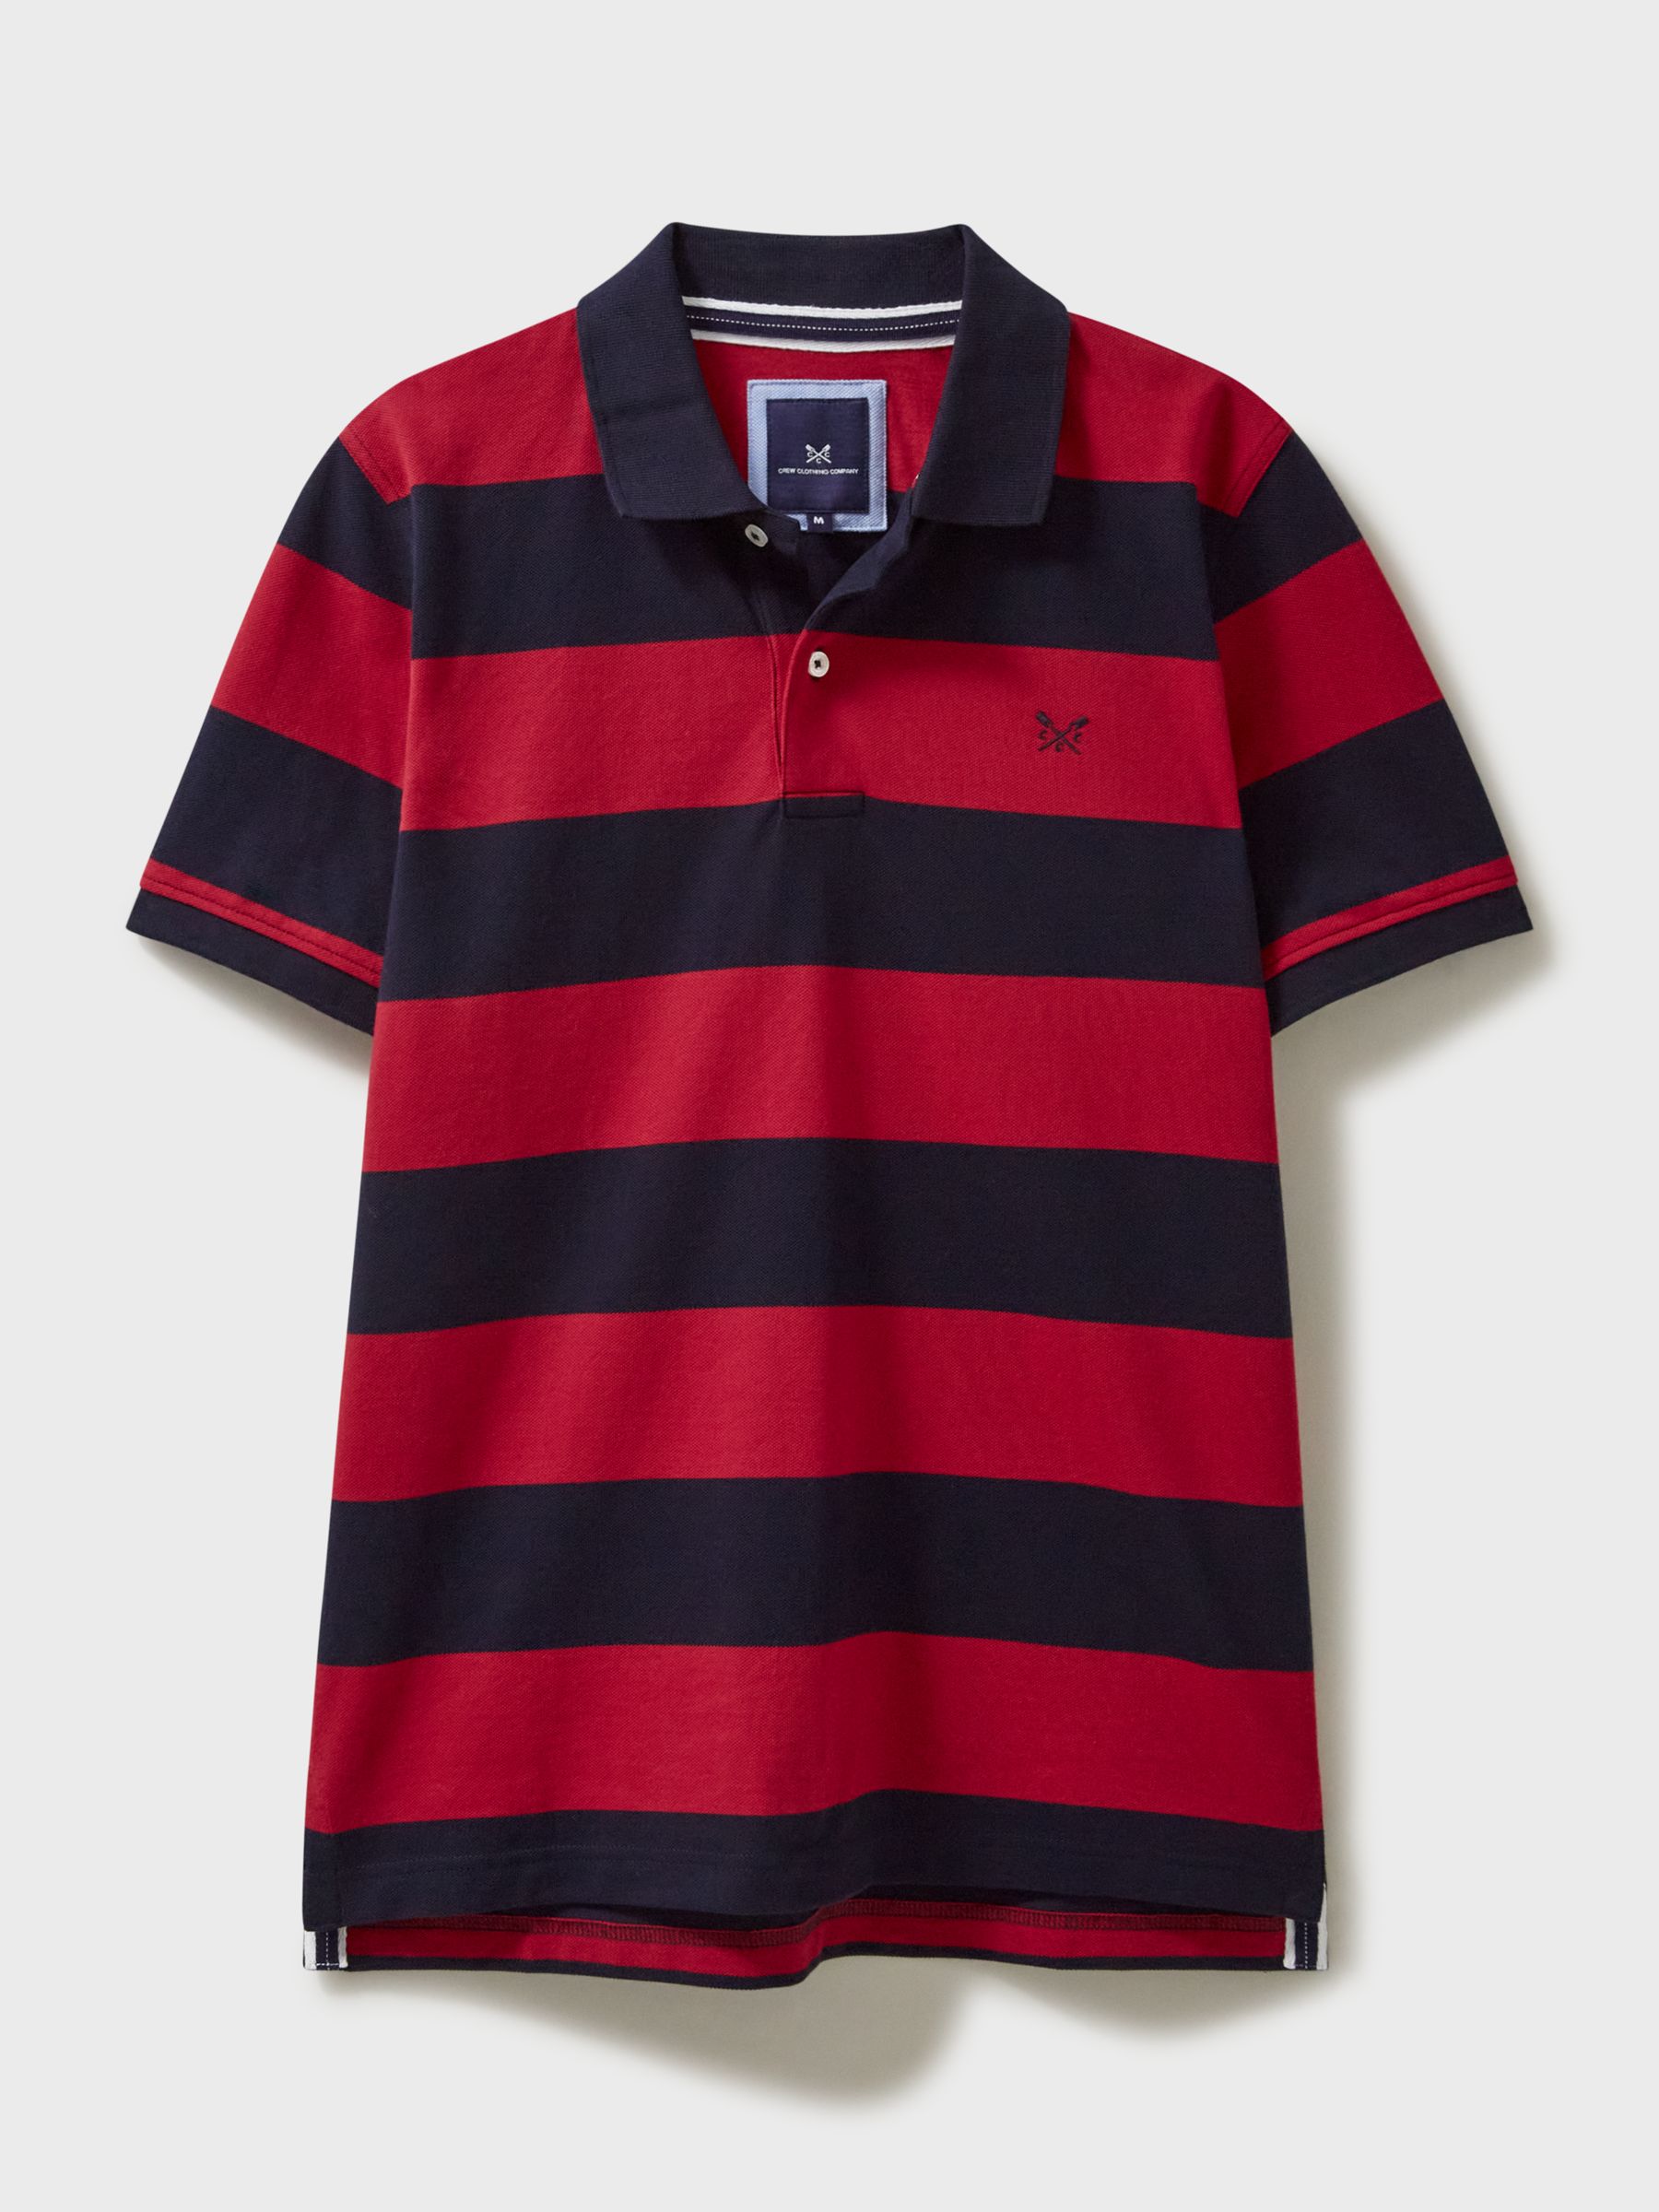 Crew Clothing Stripe Polo Shirt, Bright Red, L